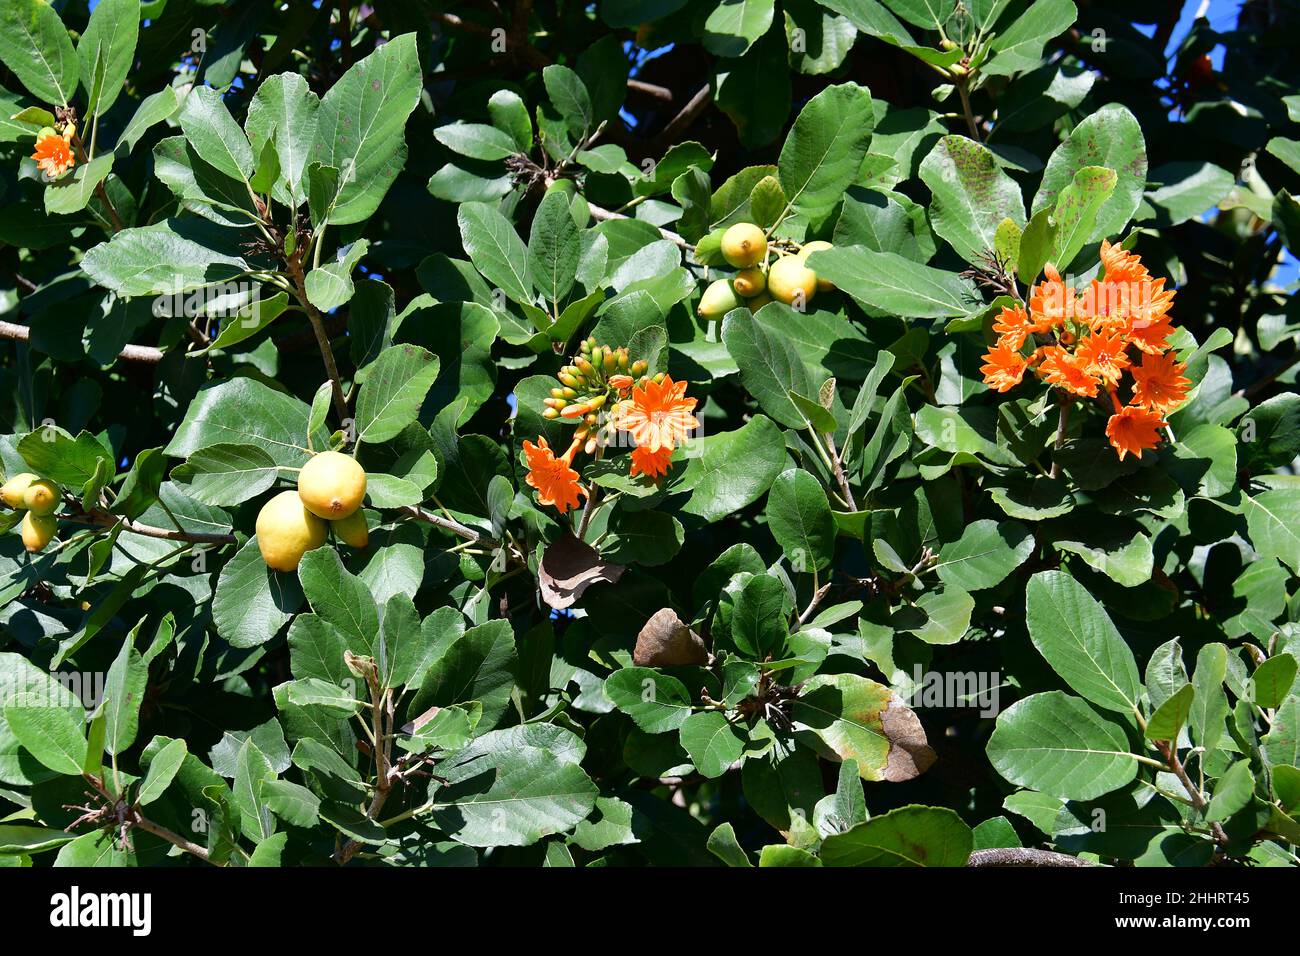 ziricote, Cordia dodecandra, Mexico, North America Stock Photo